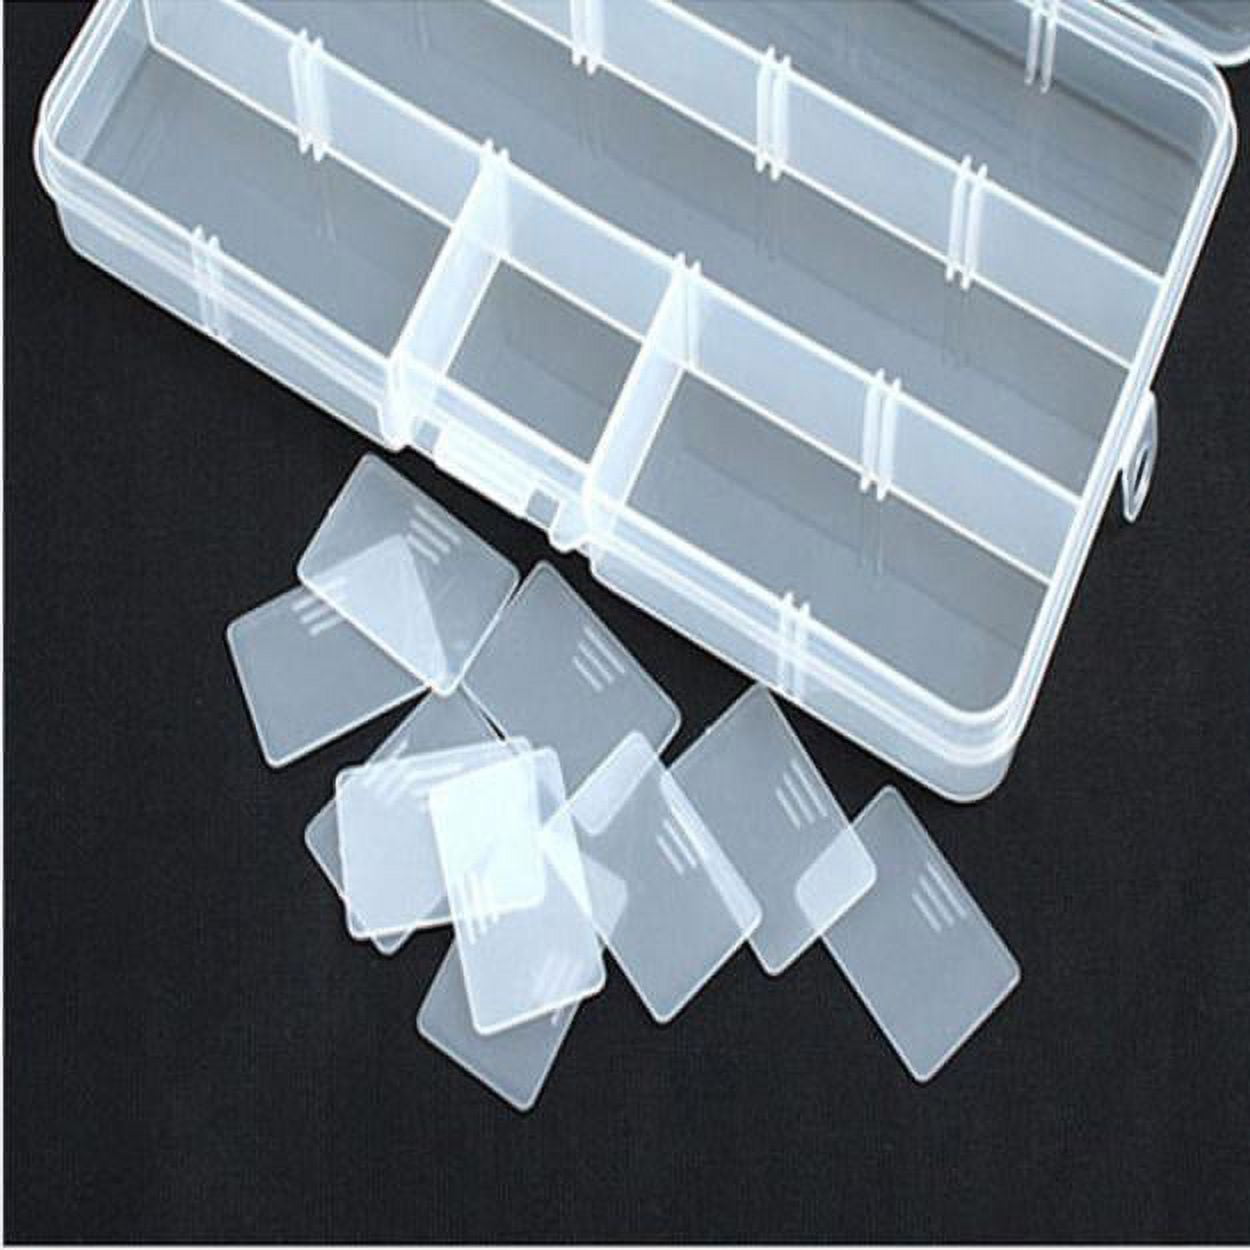 SDJMa Tackle Boxes, Plastic Box, Plastic Storage Organizer Box